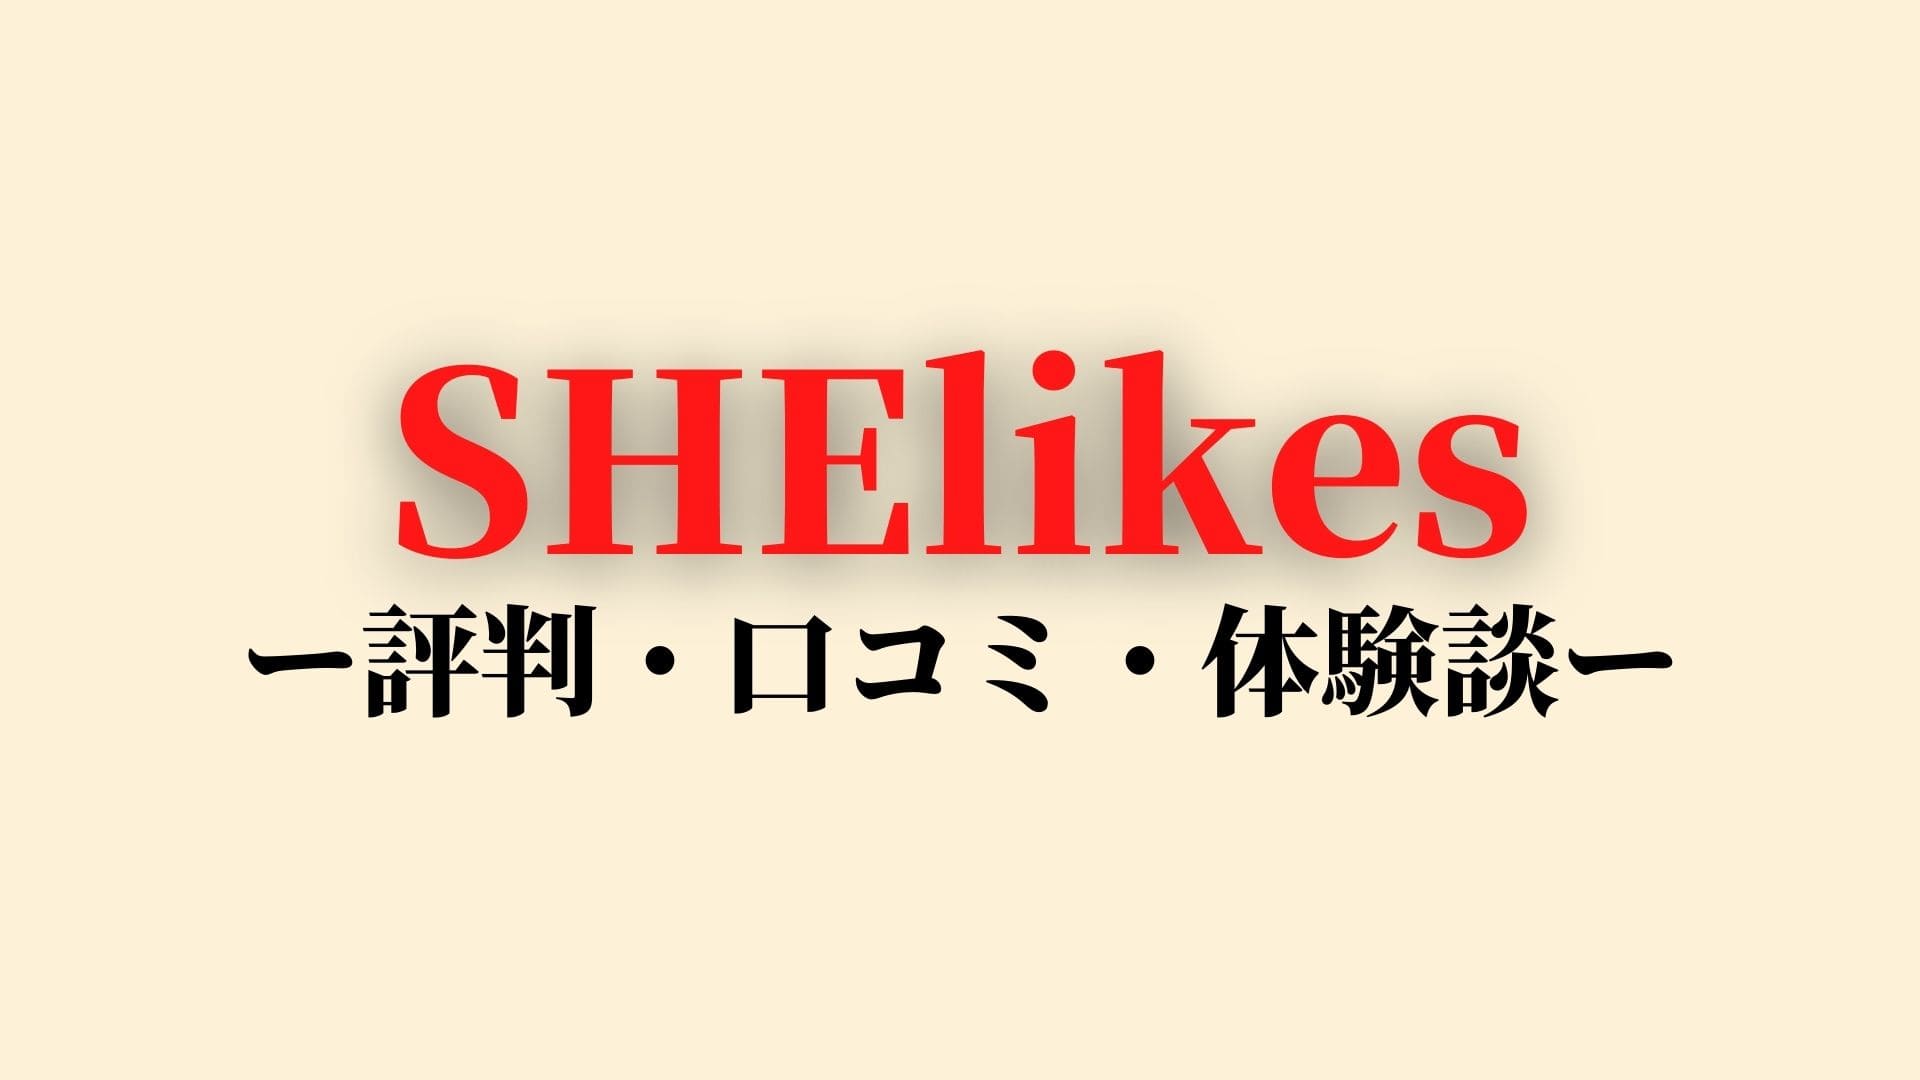 SHElikes